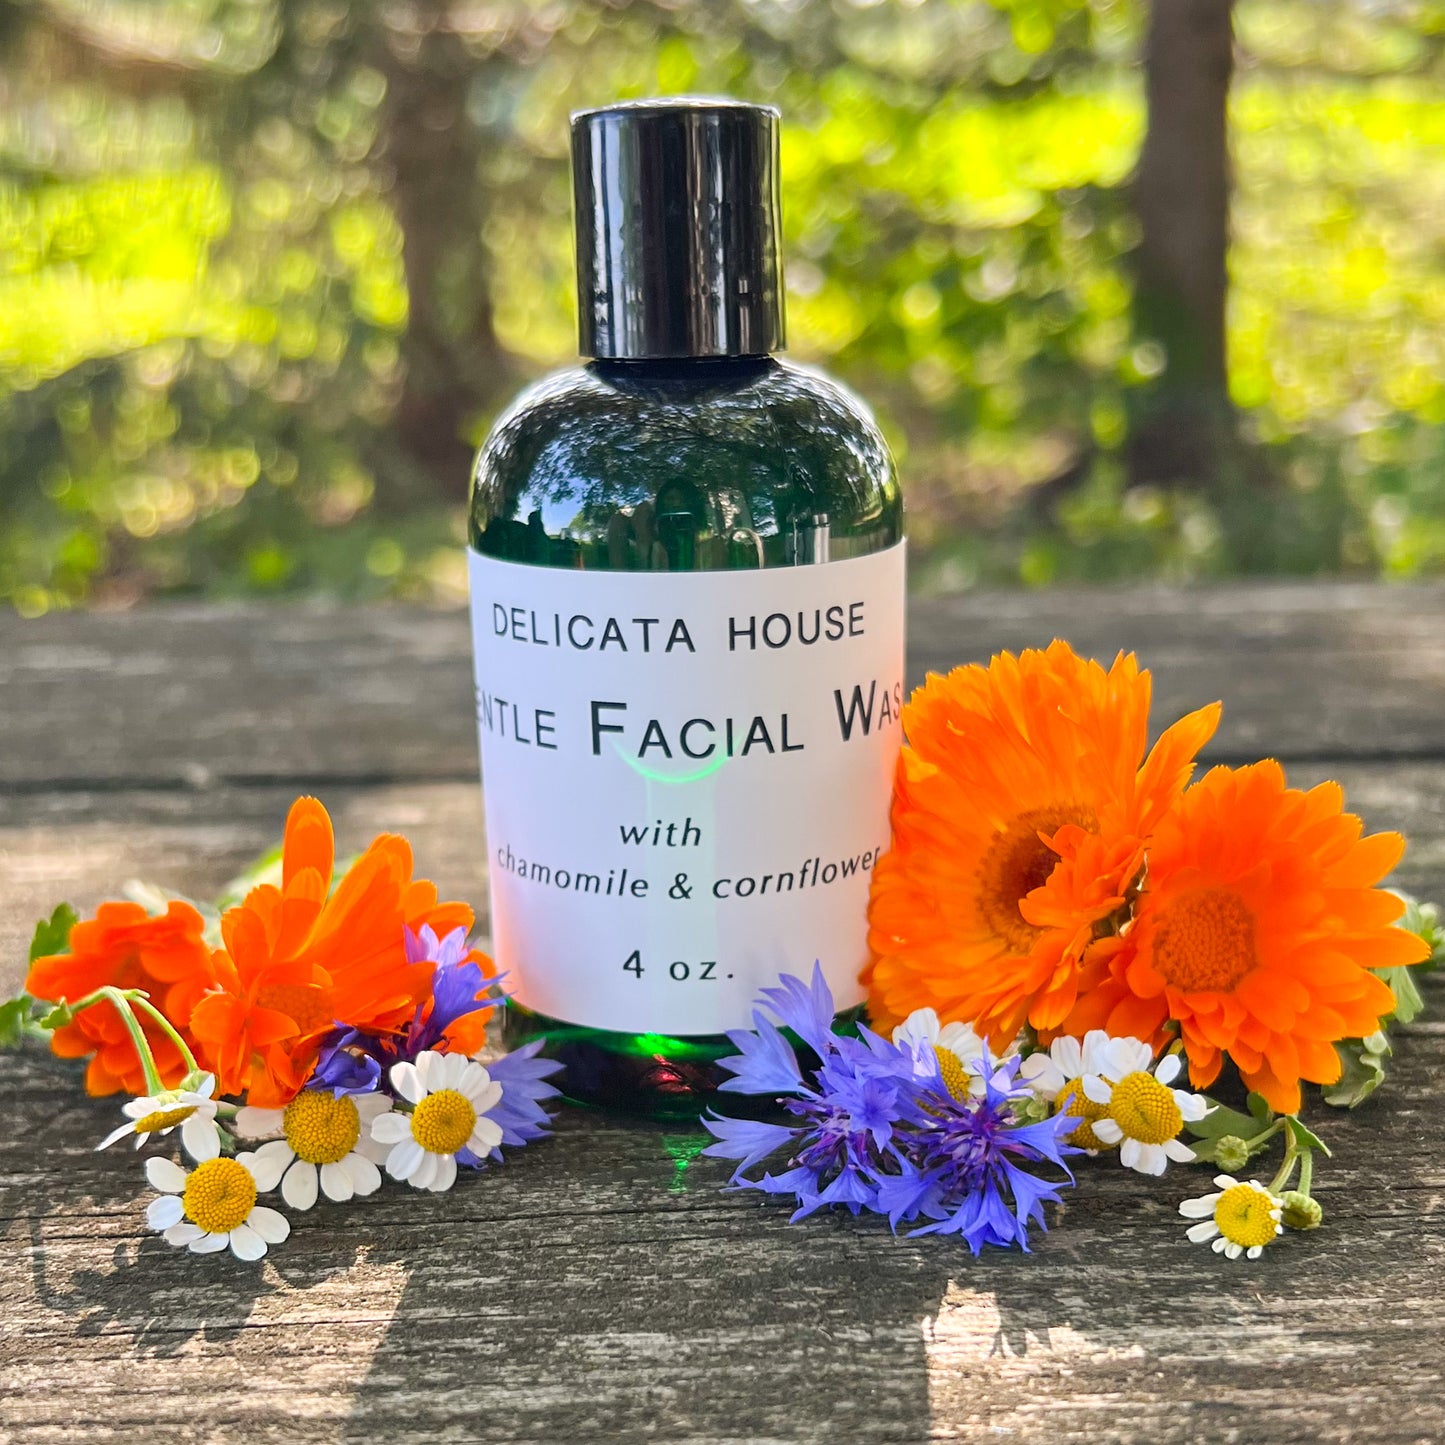 Gentle Facial Wash with Chamomile & Cornflower - Sensitive Skin Facial Wash - Gentle Skin Cleanser - Sensitive Skin Cleanser